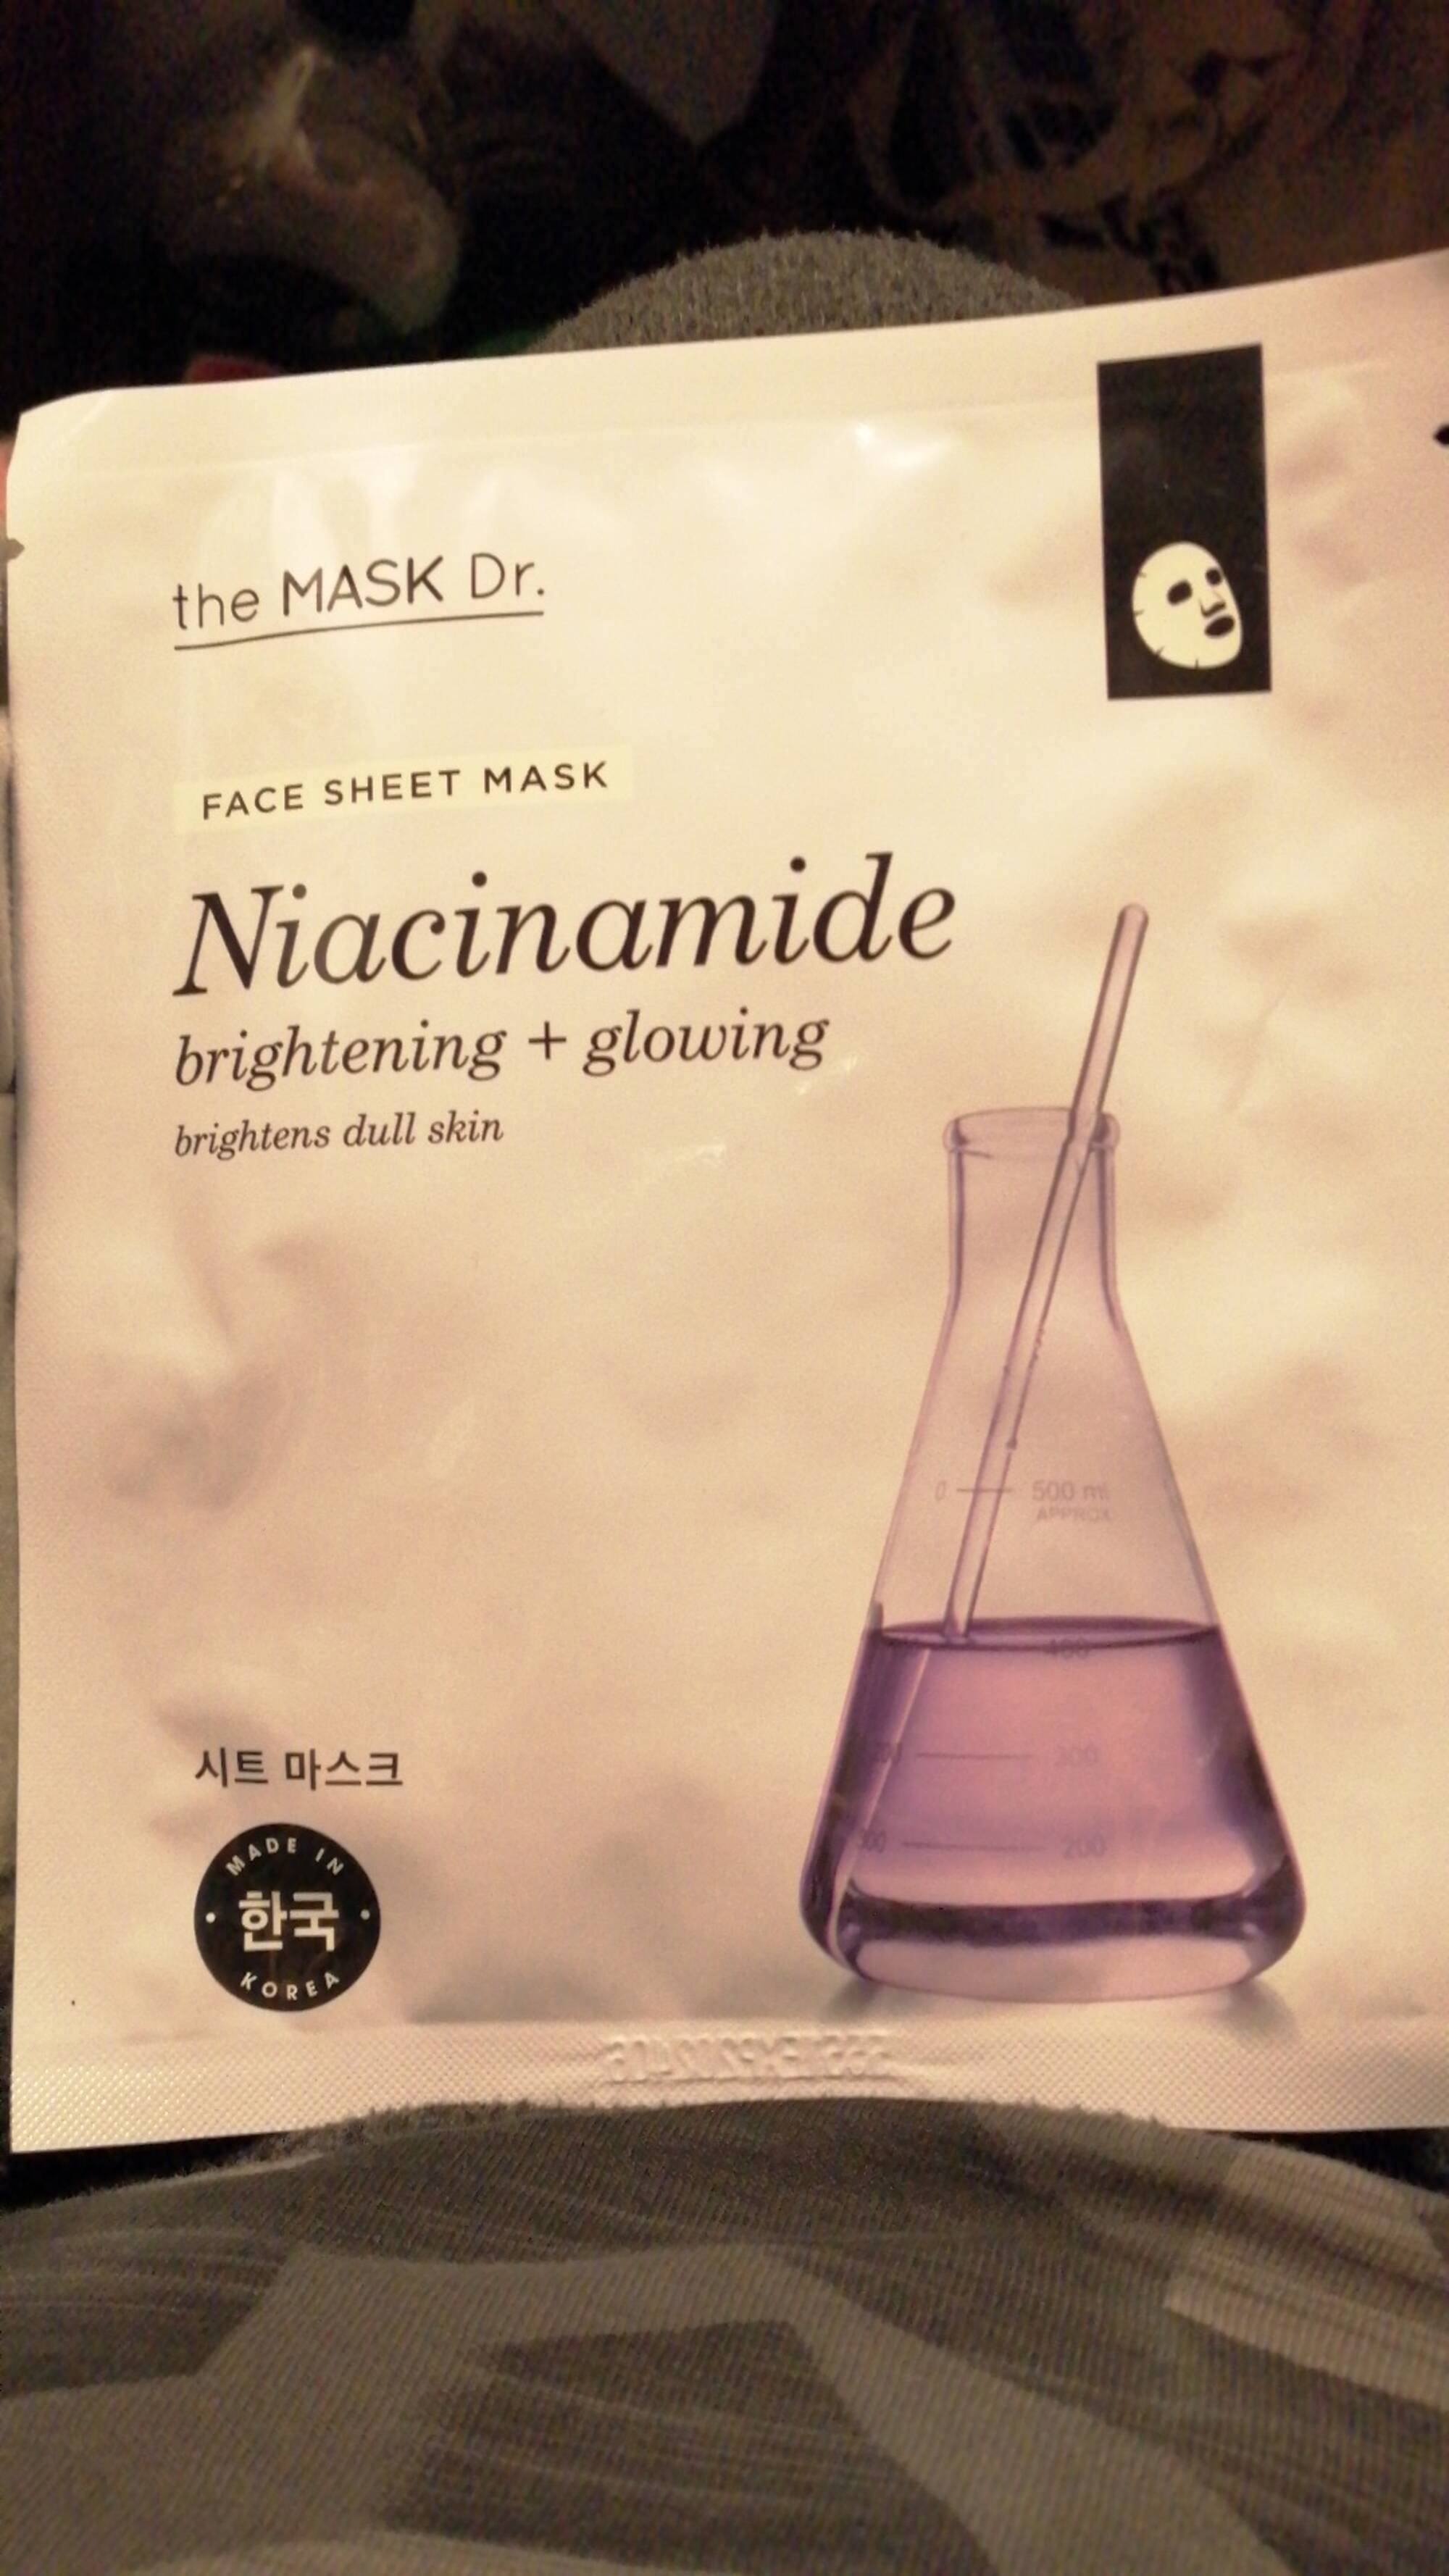 THE MASK DR. - Niacinamide - Face sheet mask